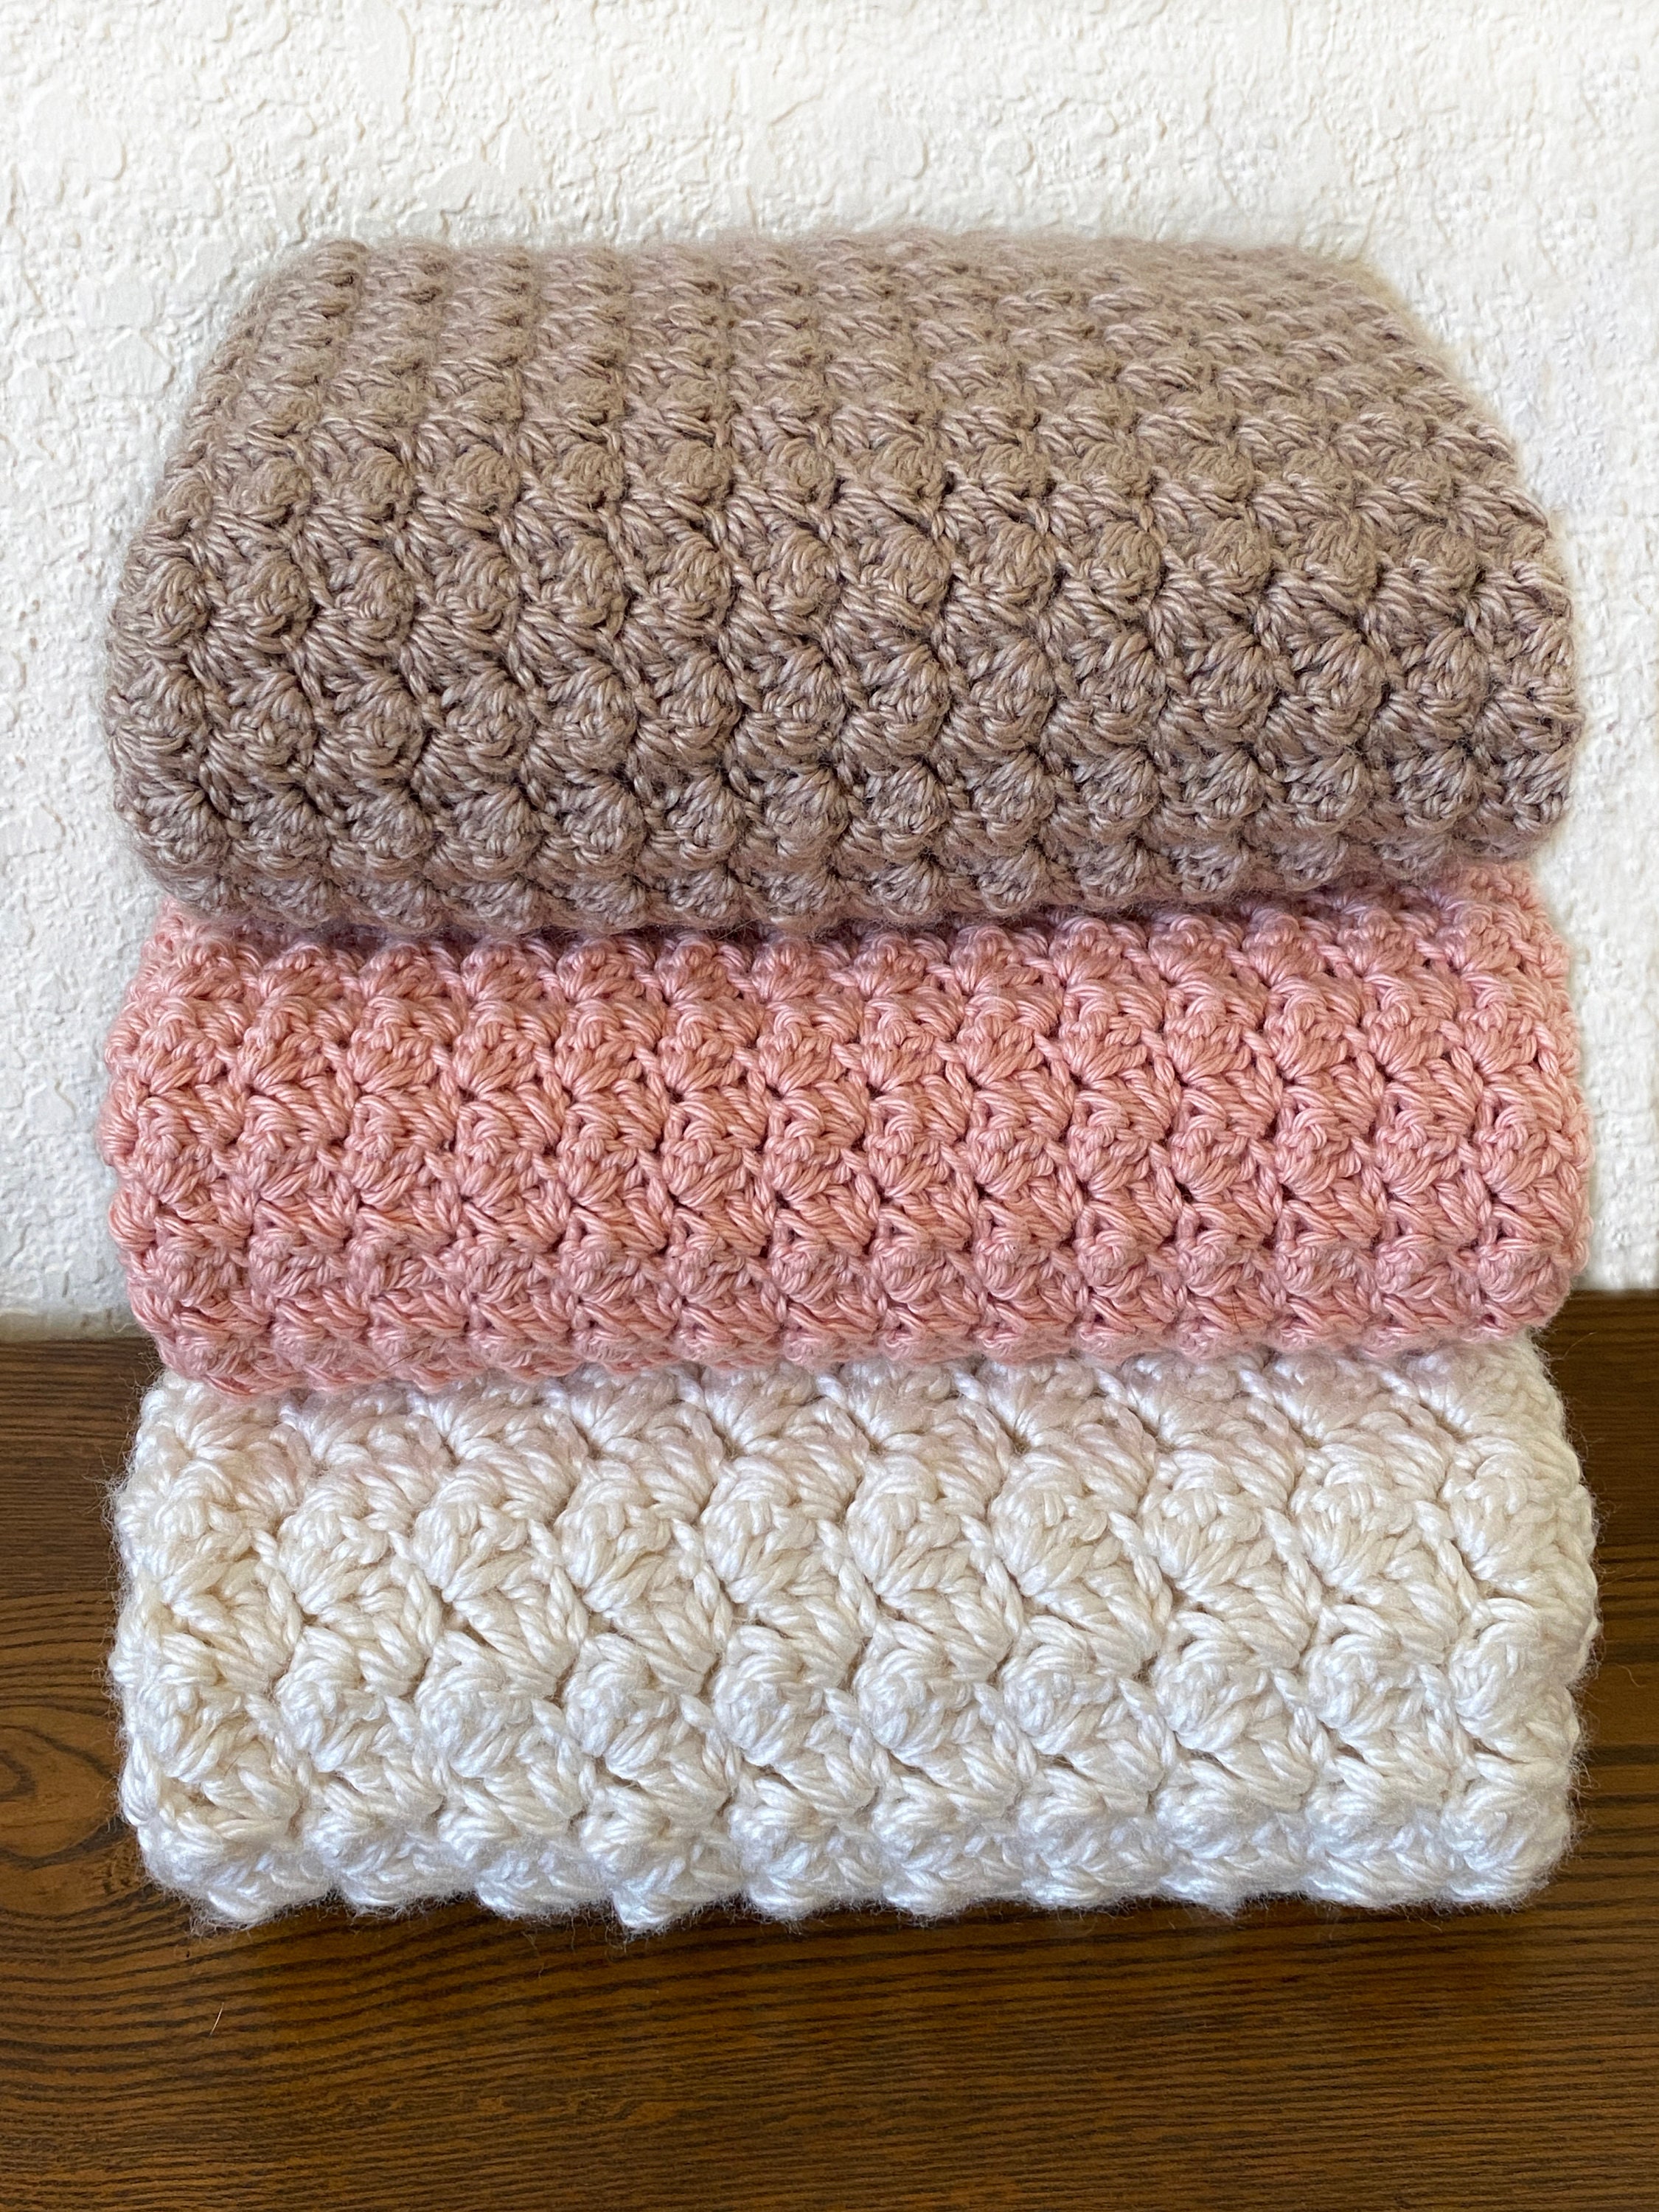 Crochet Book Review - Colorful Crochet Knitwear - Catherine Crochets